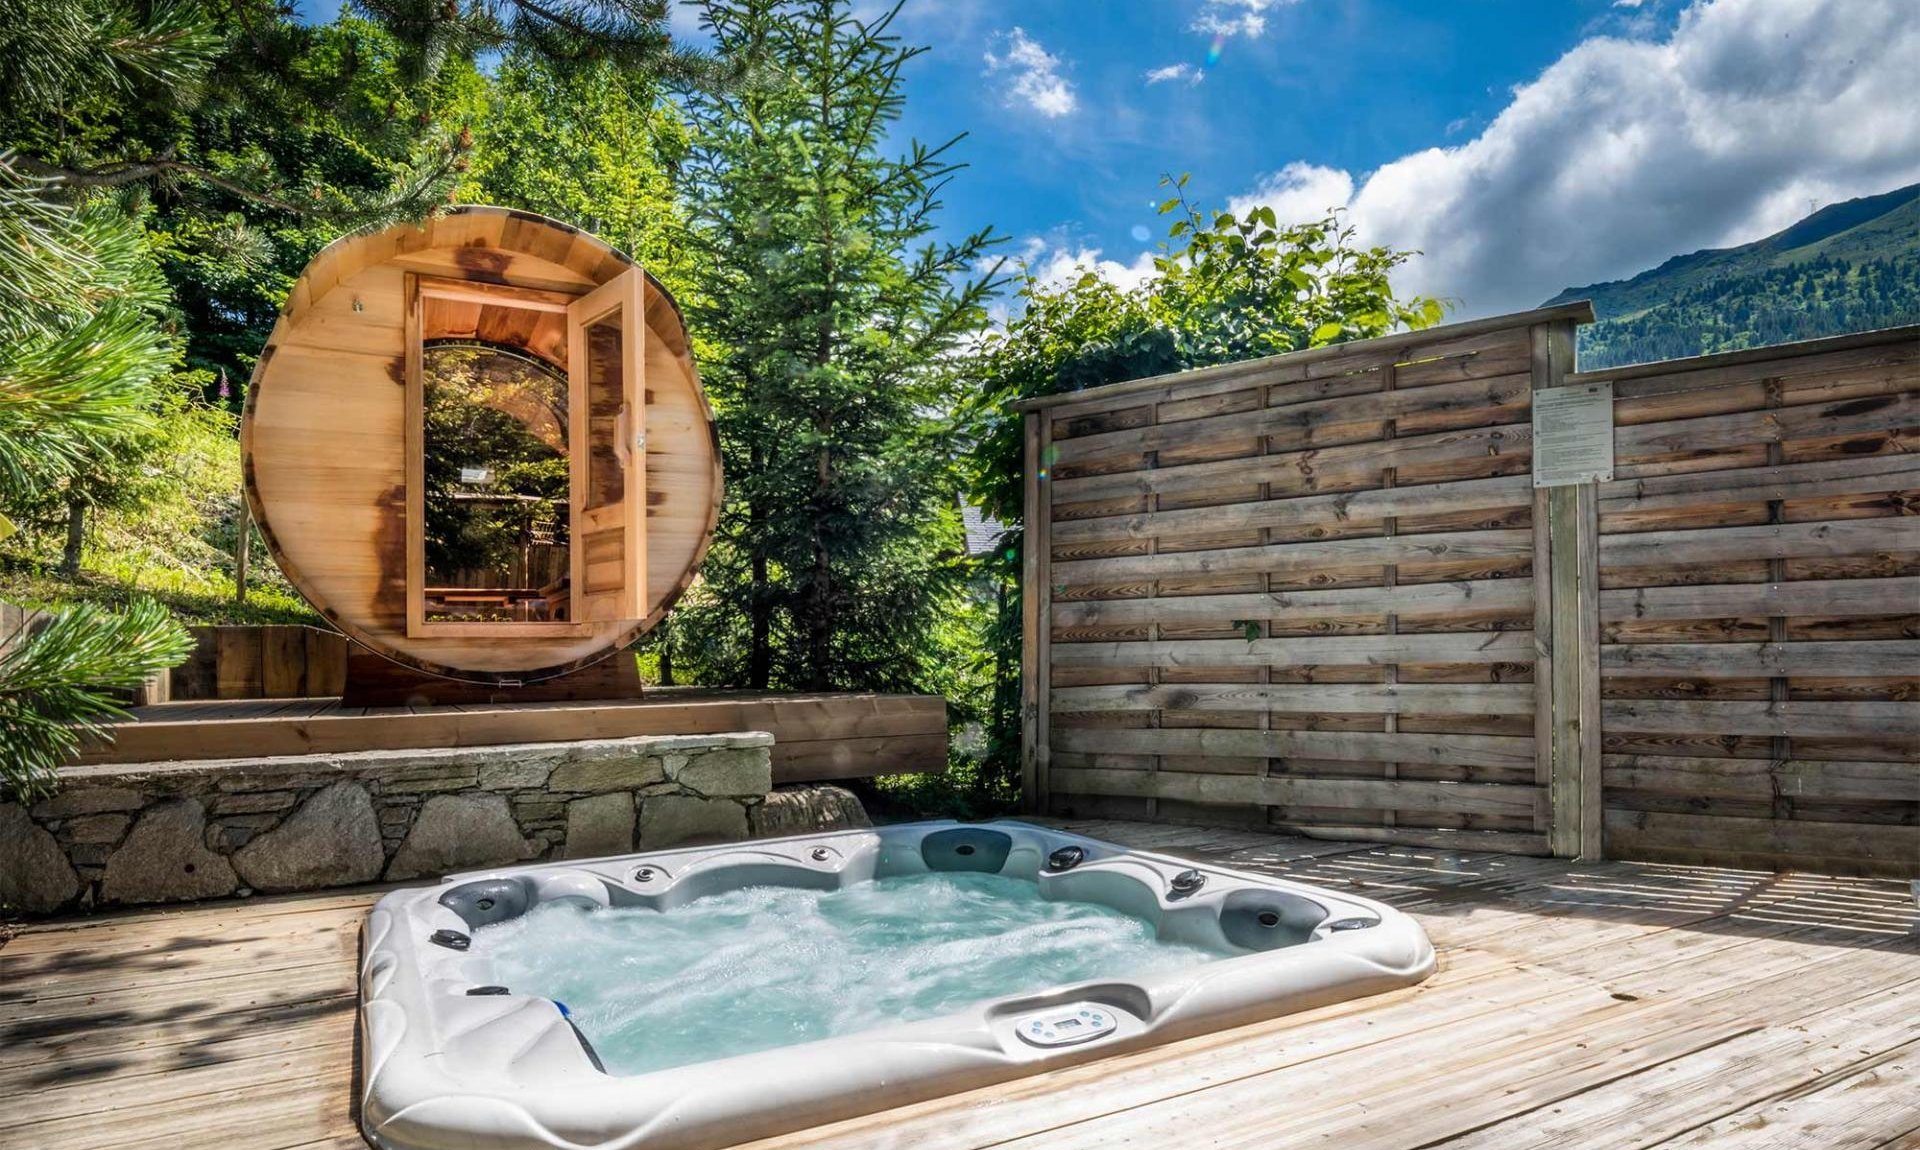 The outdoor Hot Tub & Sauna at Chalet Brioche in Meribel